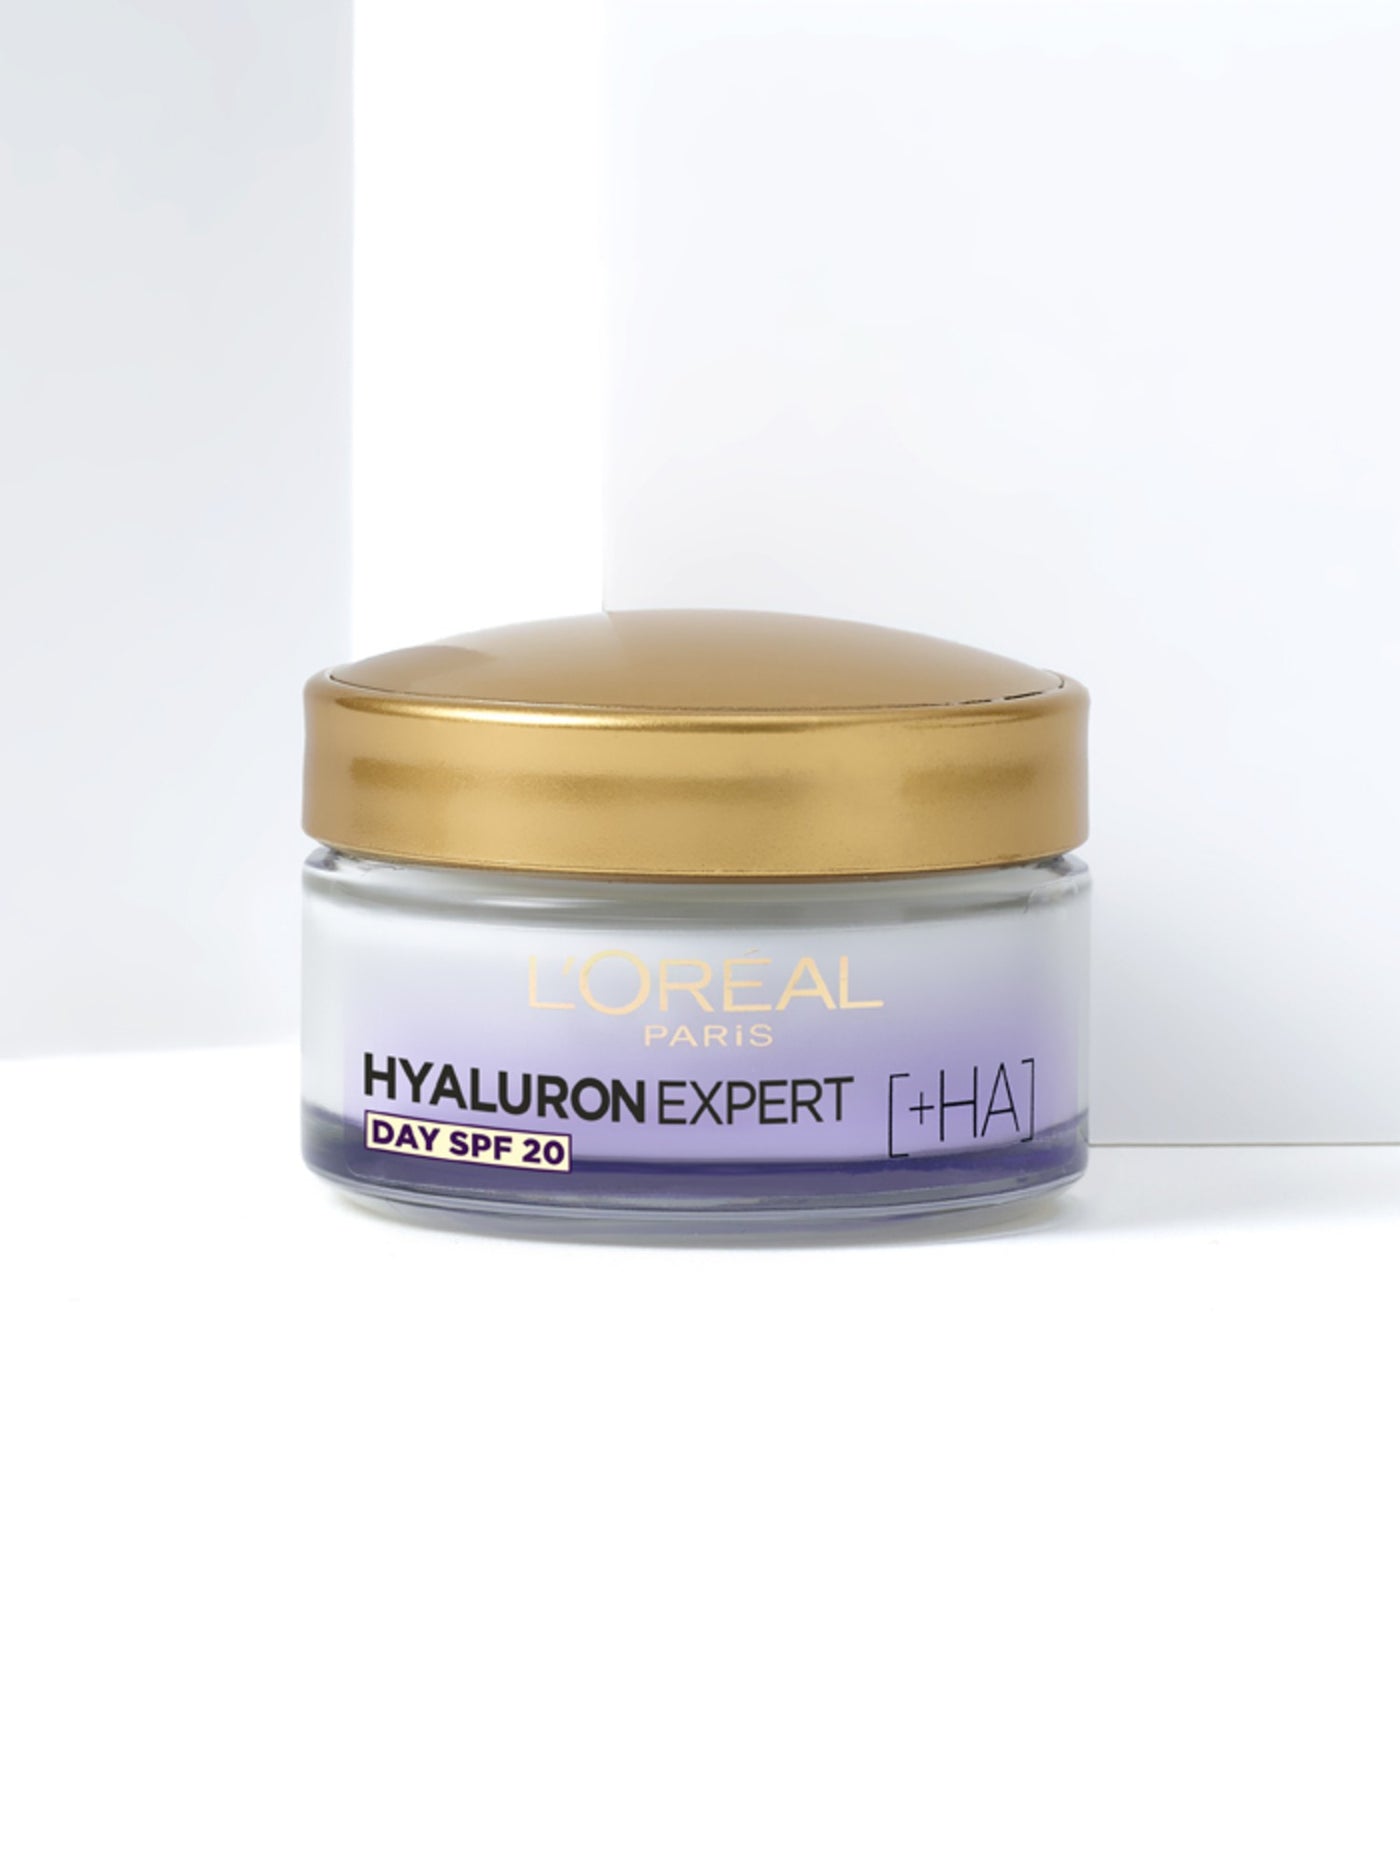 Hyaluron Expert Night Cream